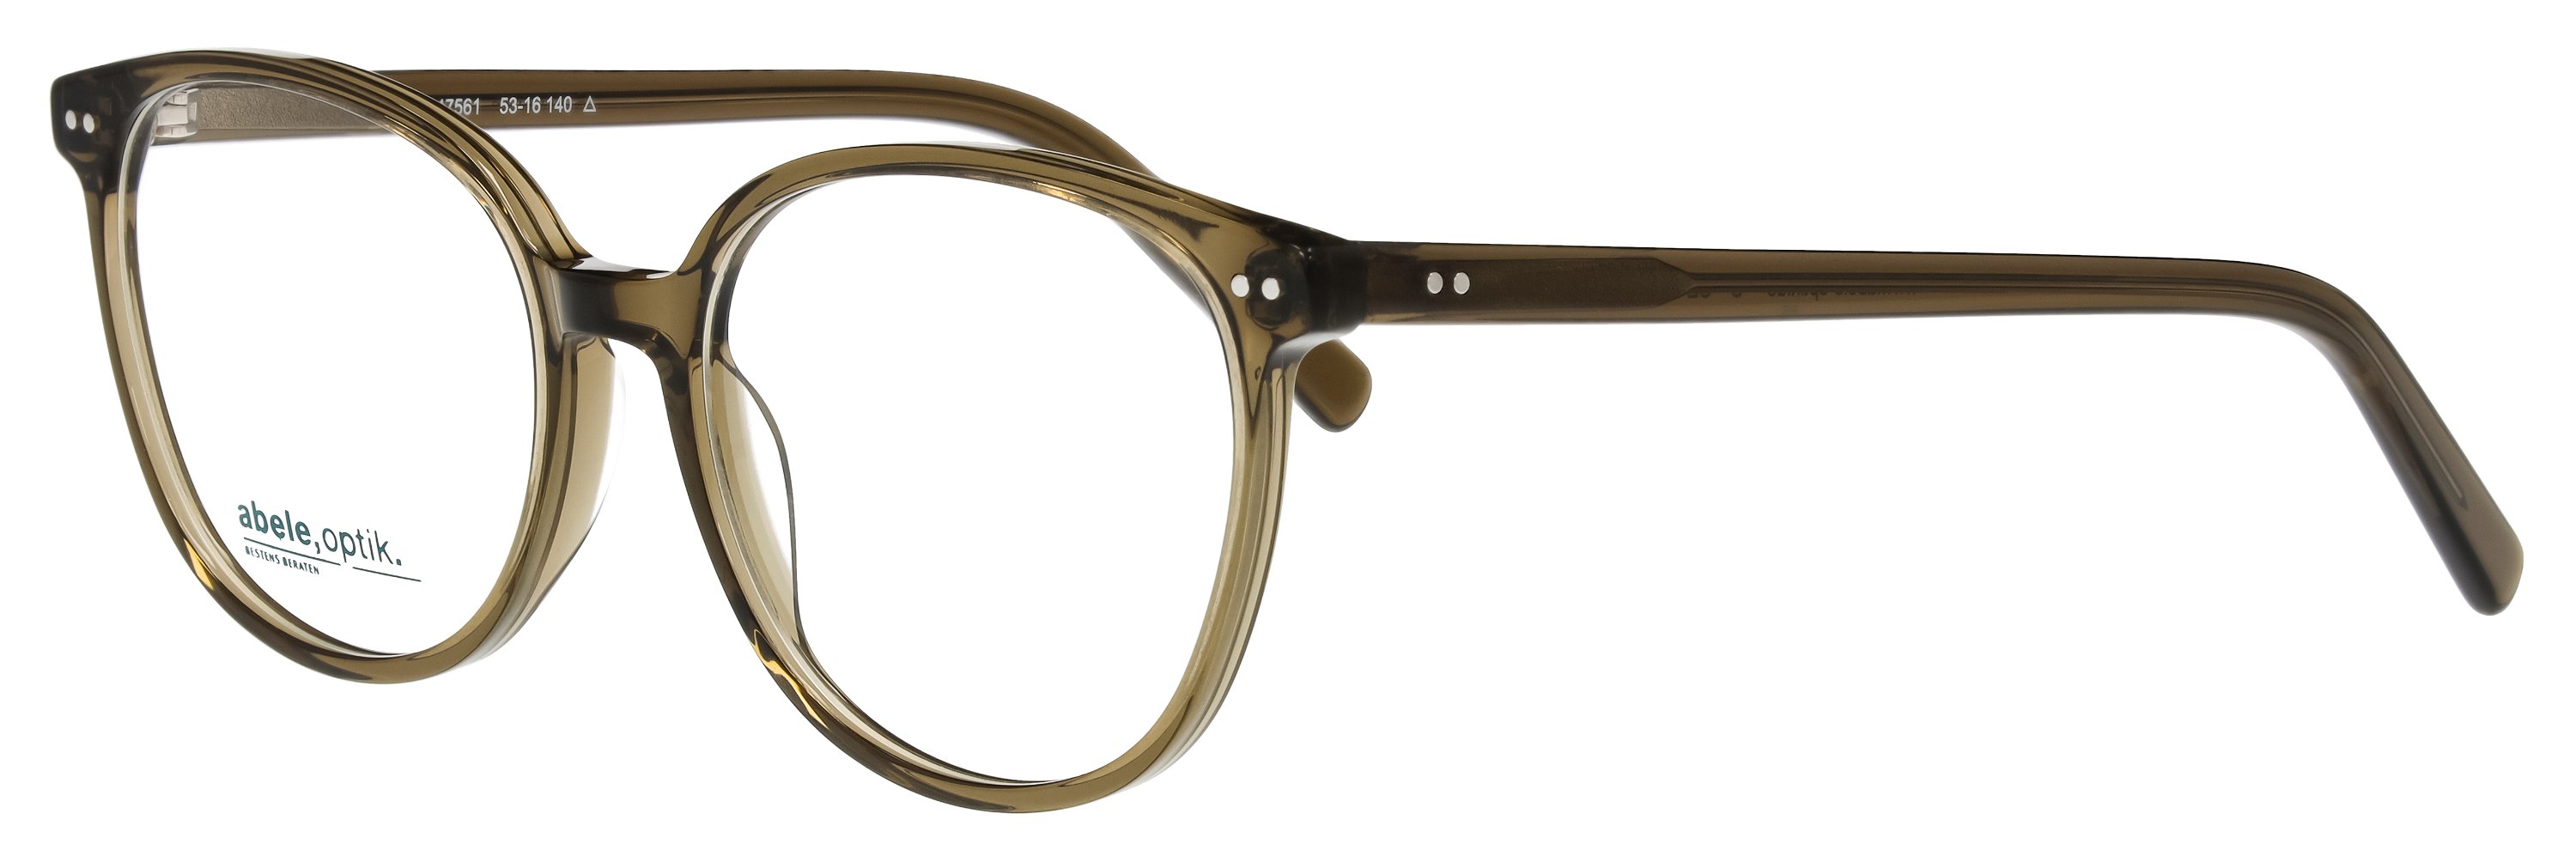 abele optik Brille für Damen in olivgrün 147561